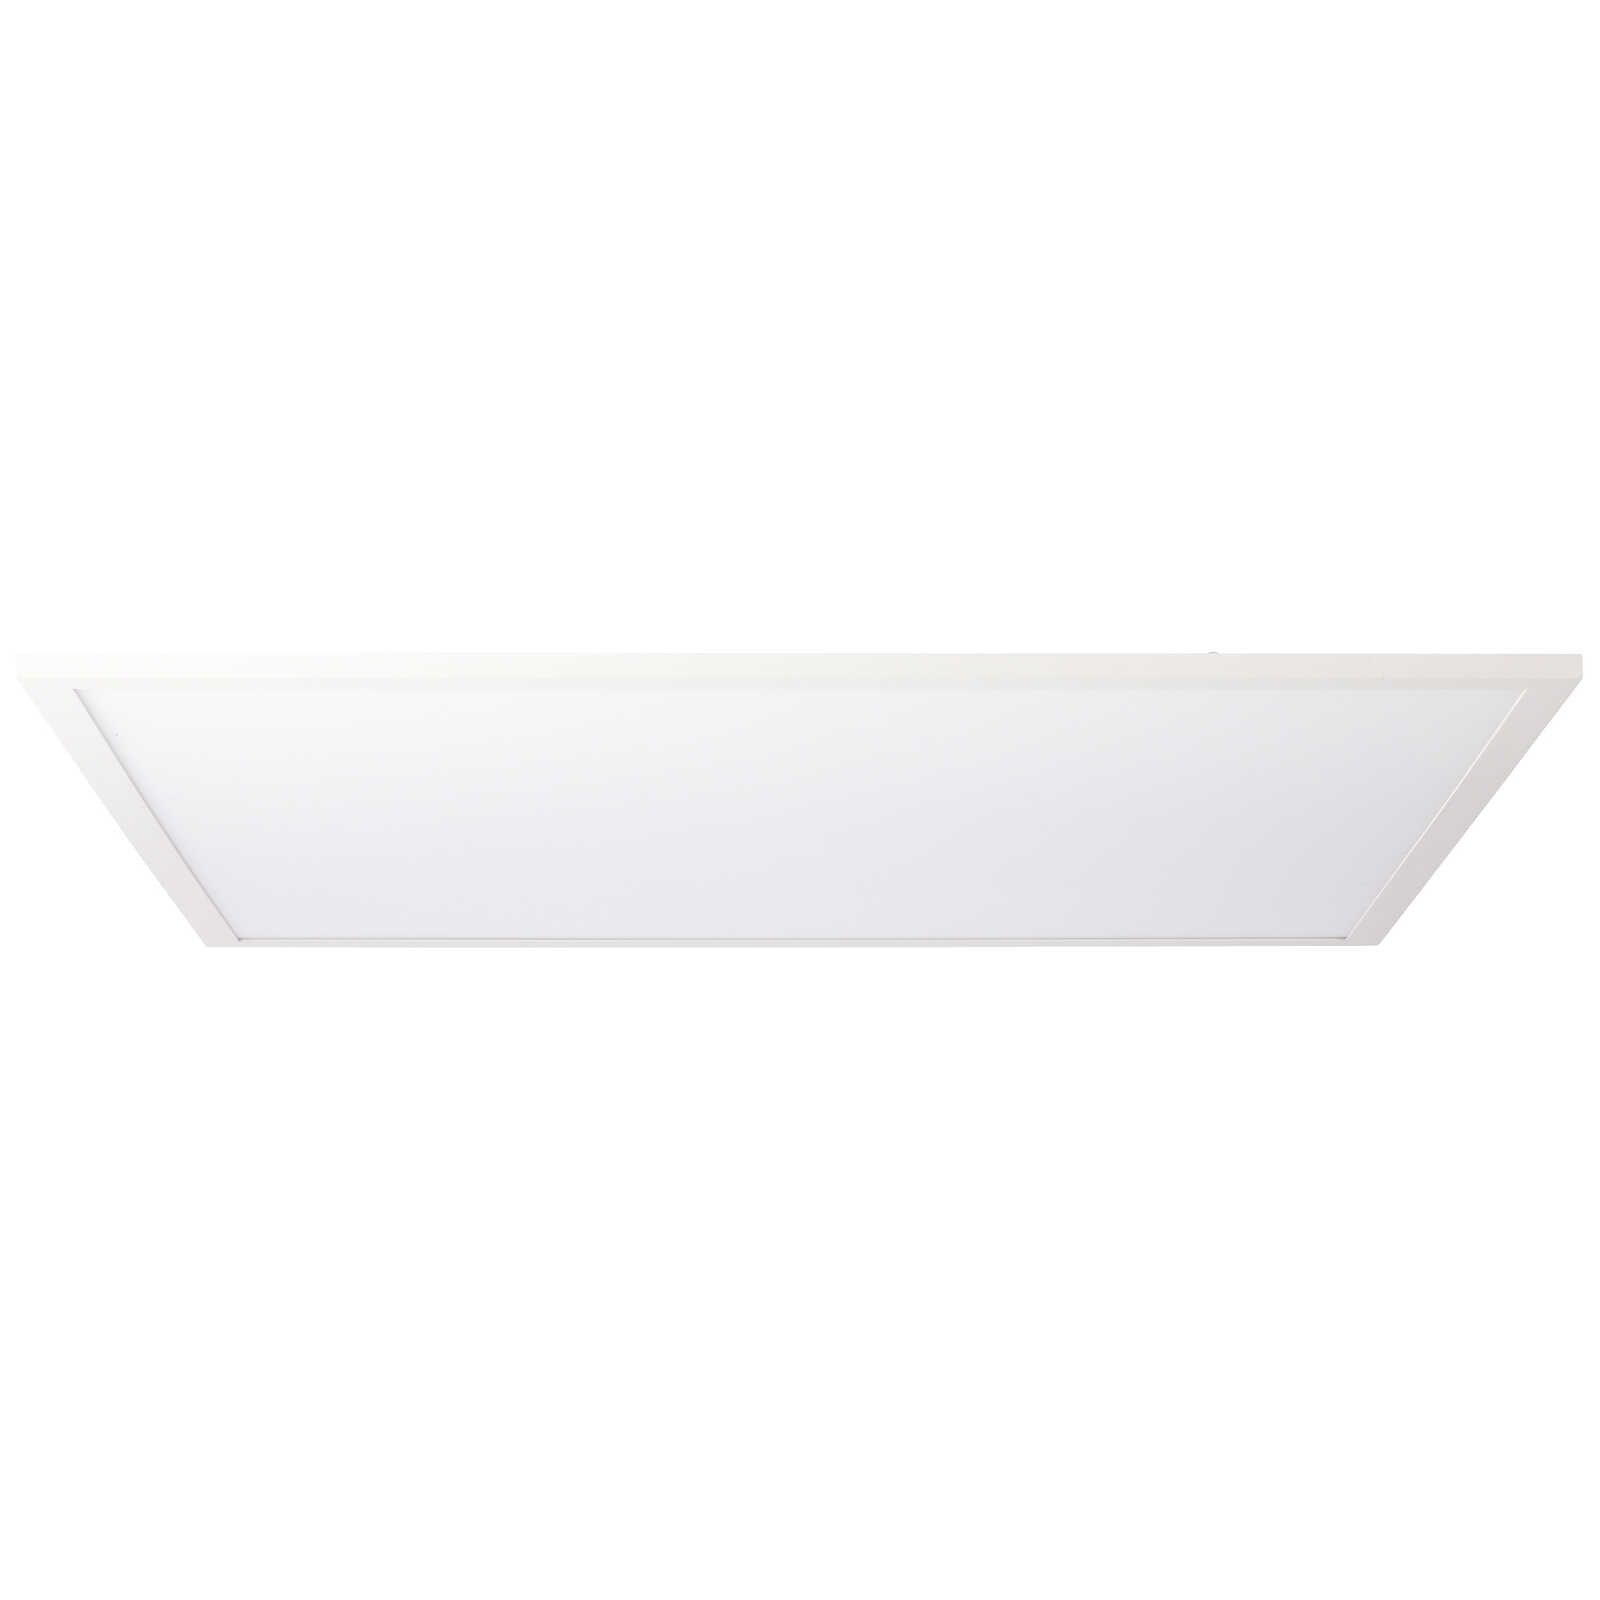             Plastic ceiling light - Constantin 8 - White
        